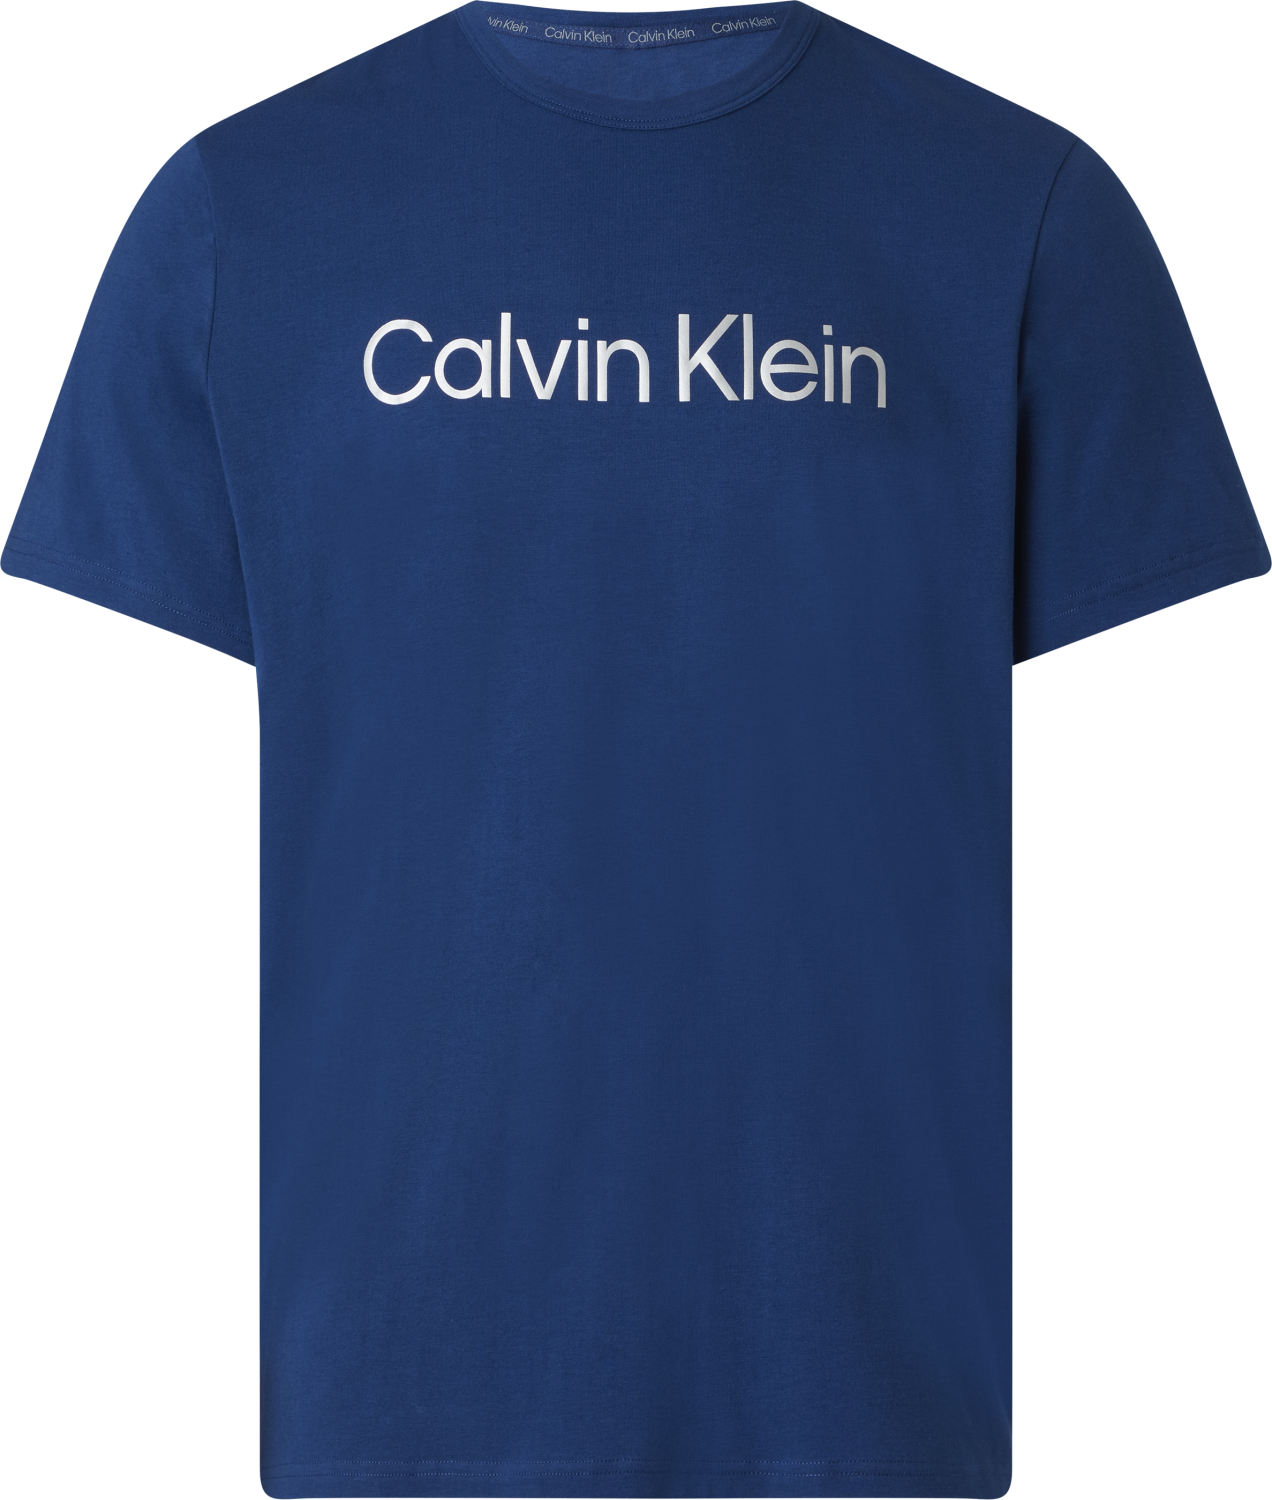 Calvin Klein S/S CREW NECK LAKE CREST BLUE